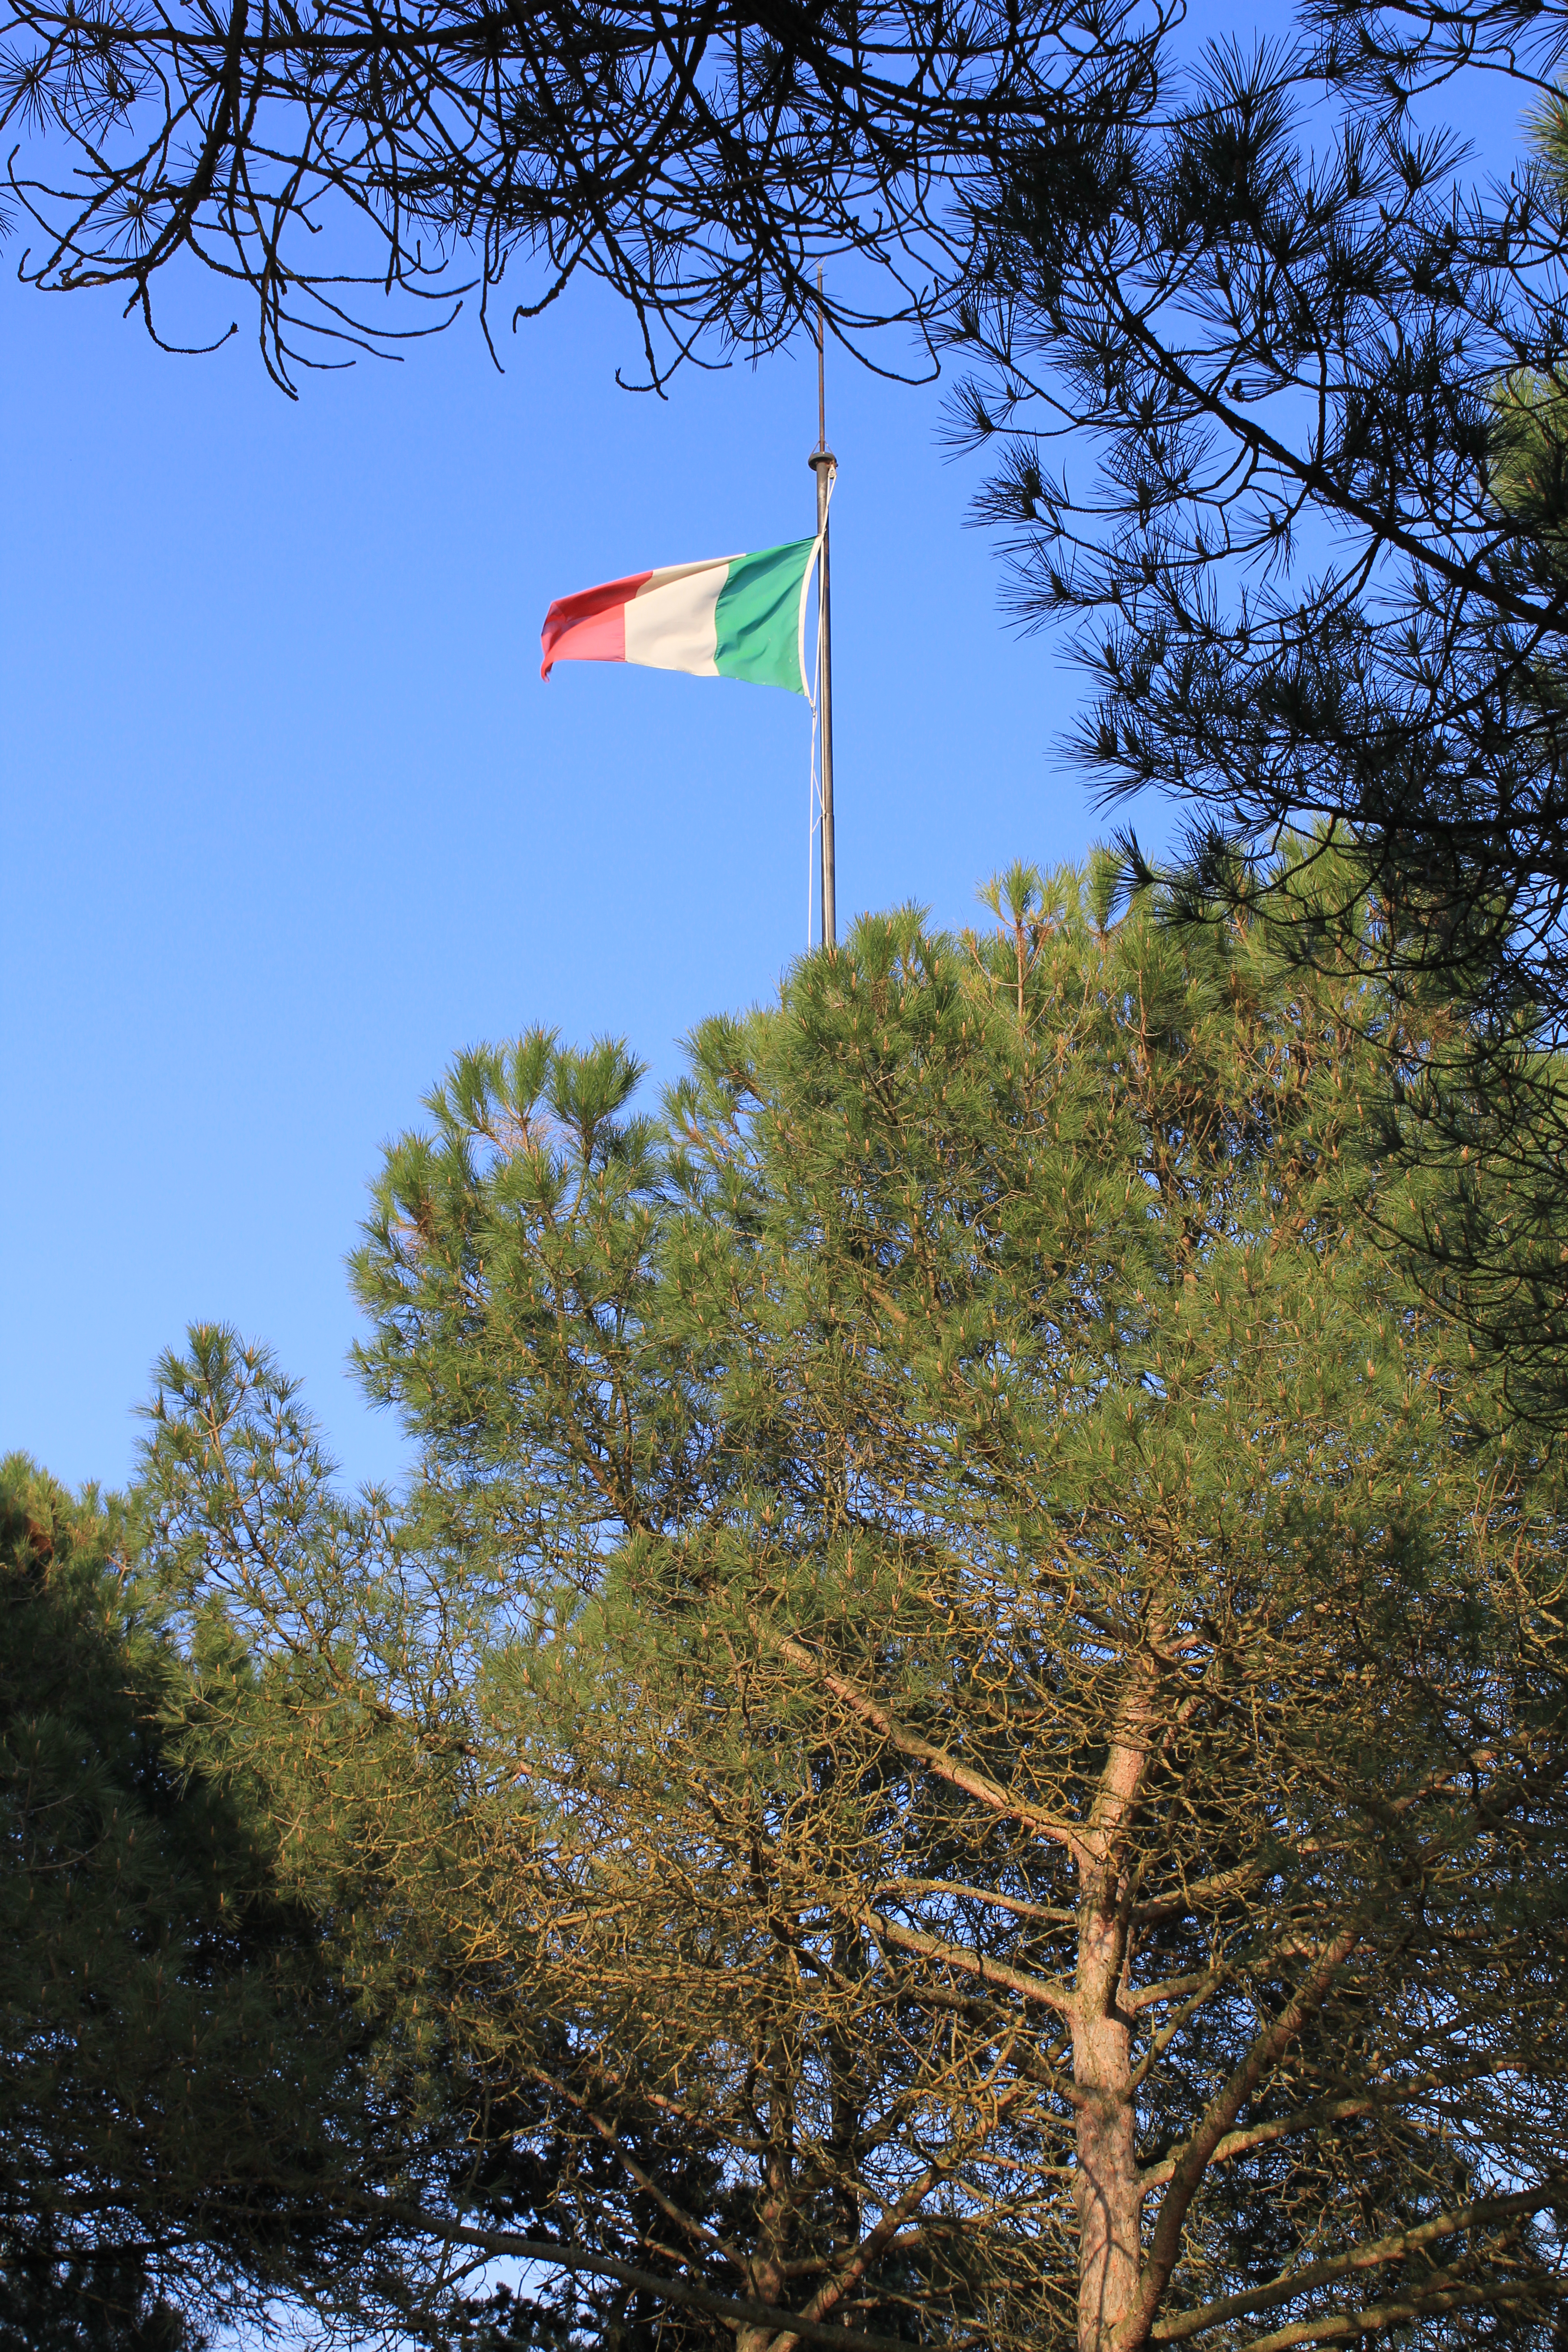 photo: https://upload.wikimedia.org/wikipedia/commons/c/c3/Capanno_Garibaldi_-_bandiera_italiana.jpg